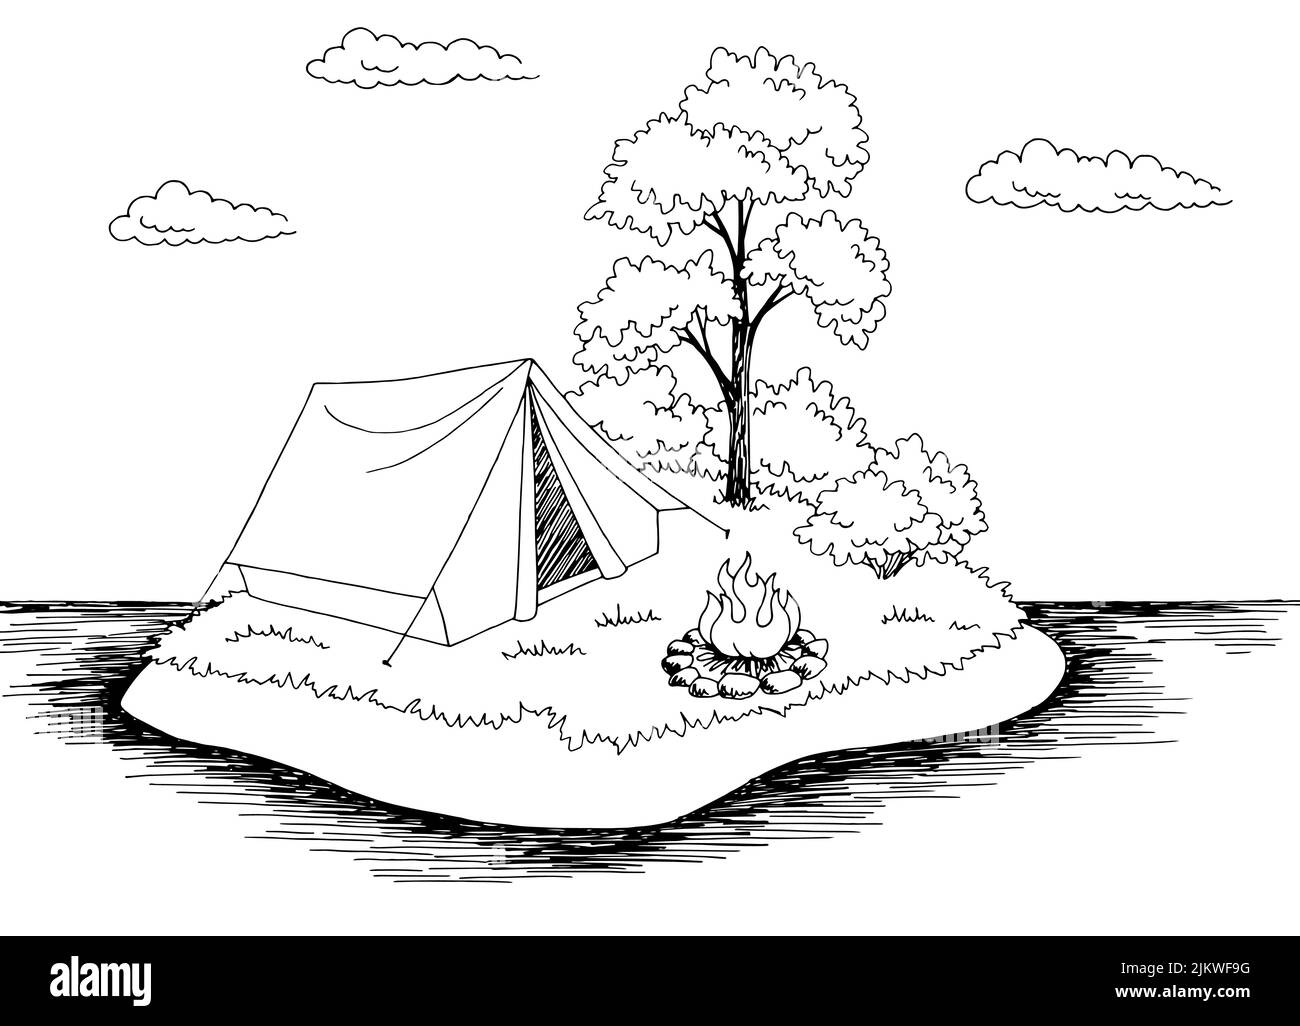 Insel Camping Grafik schwarz weiß Landschaft Skizze Illustration Vektor Stock Vektor